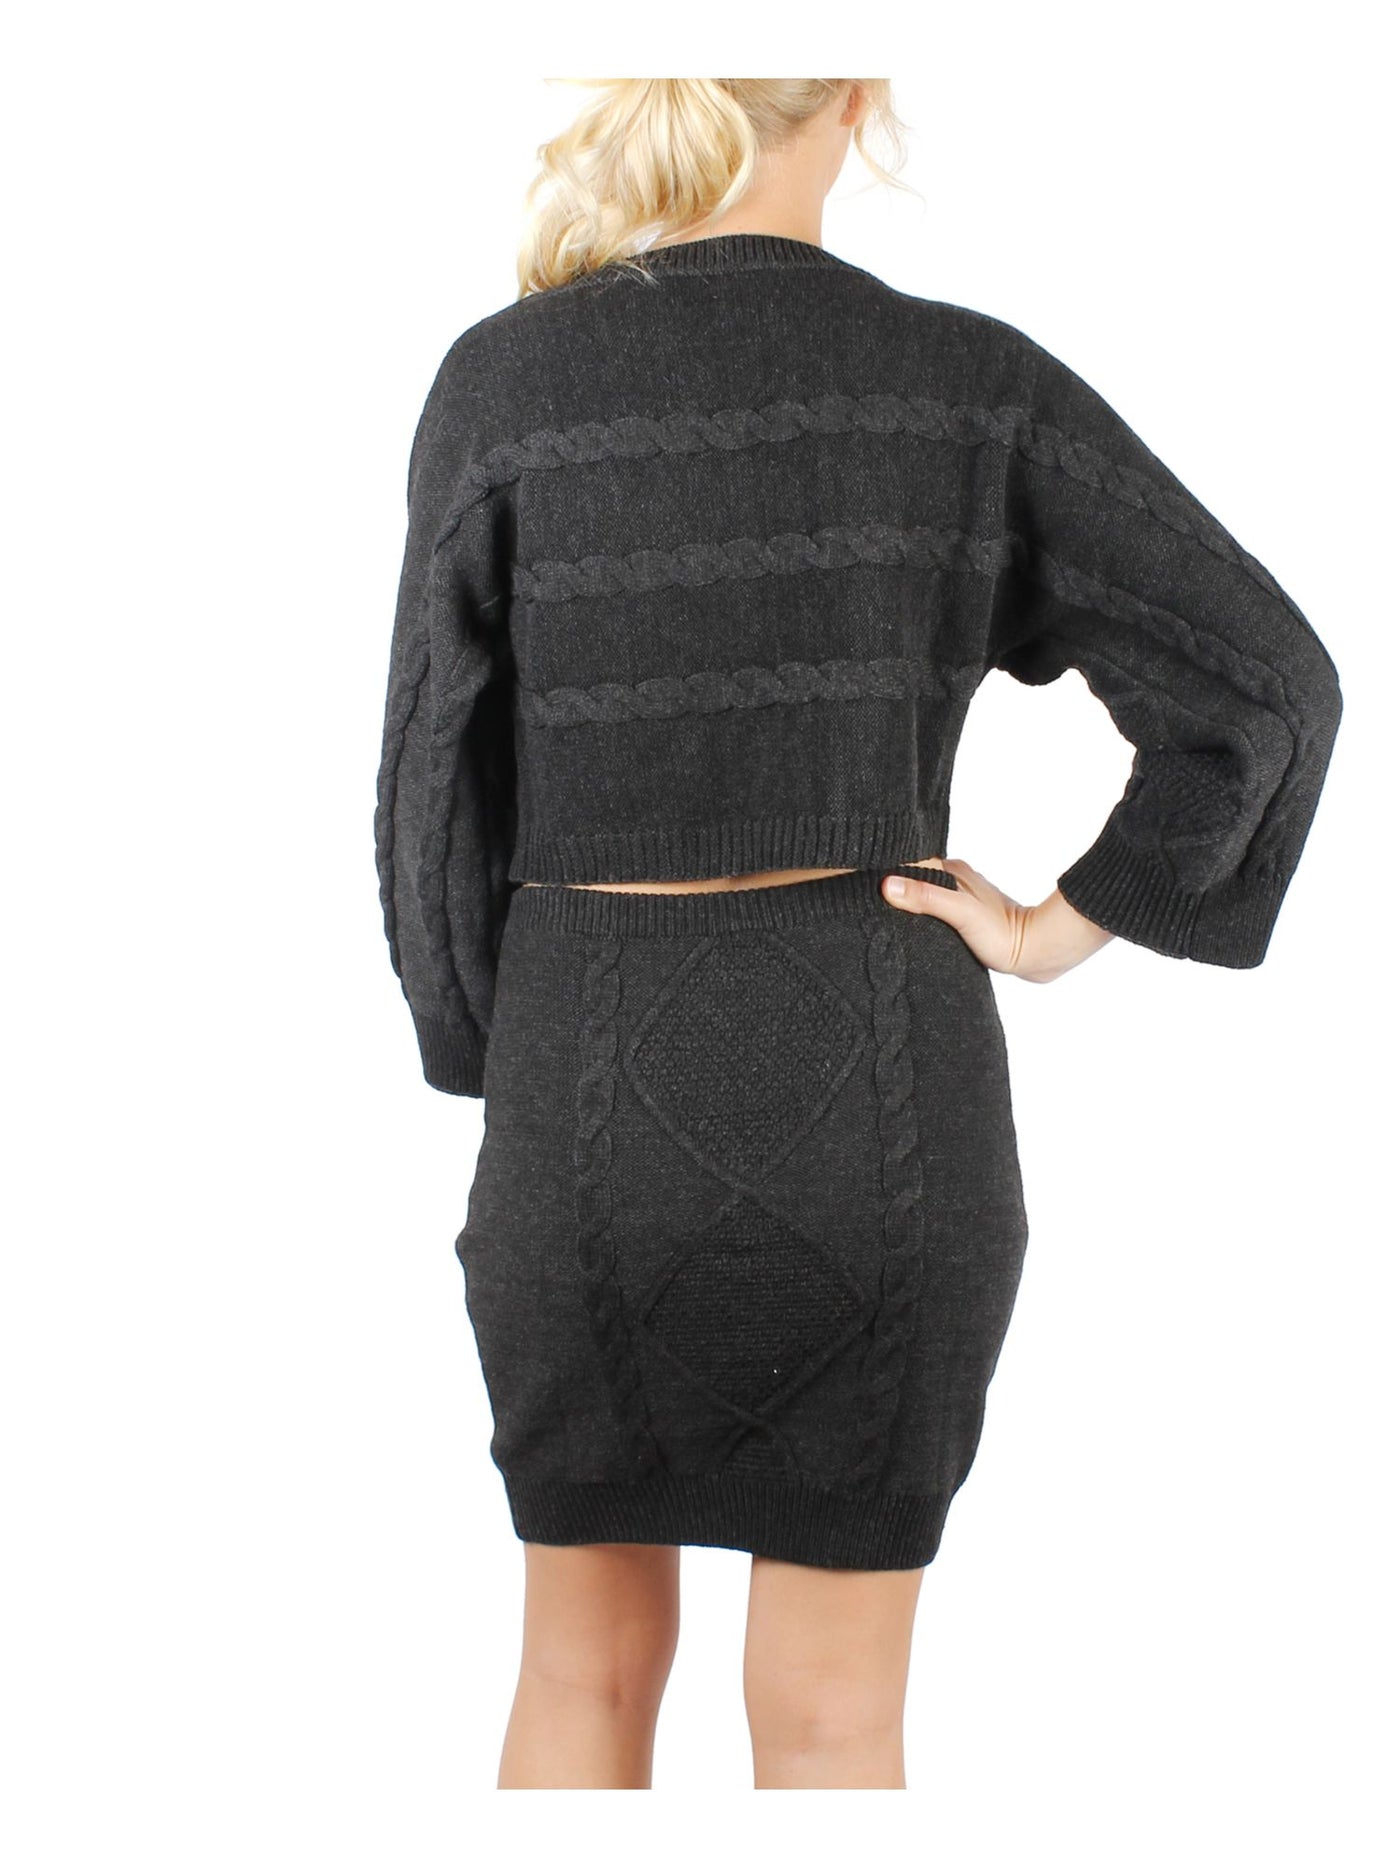 CRYSTAL DOLLS Womens Bell Sleeve Crew Neck Crop Top Sweater